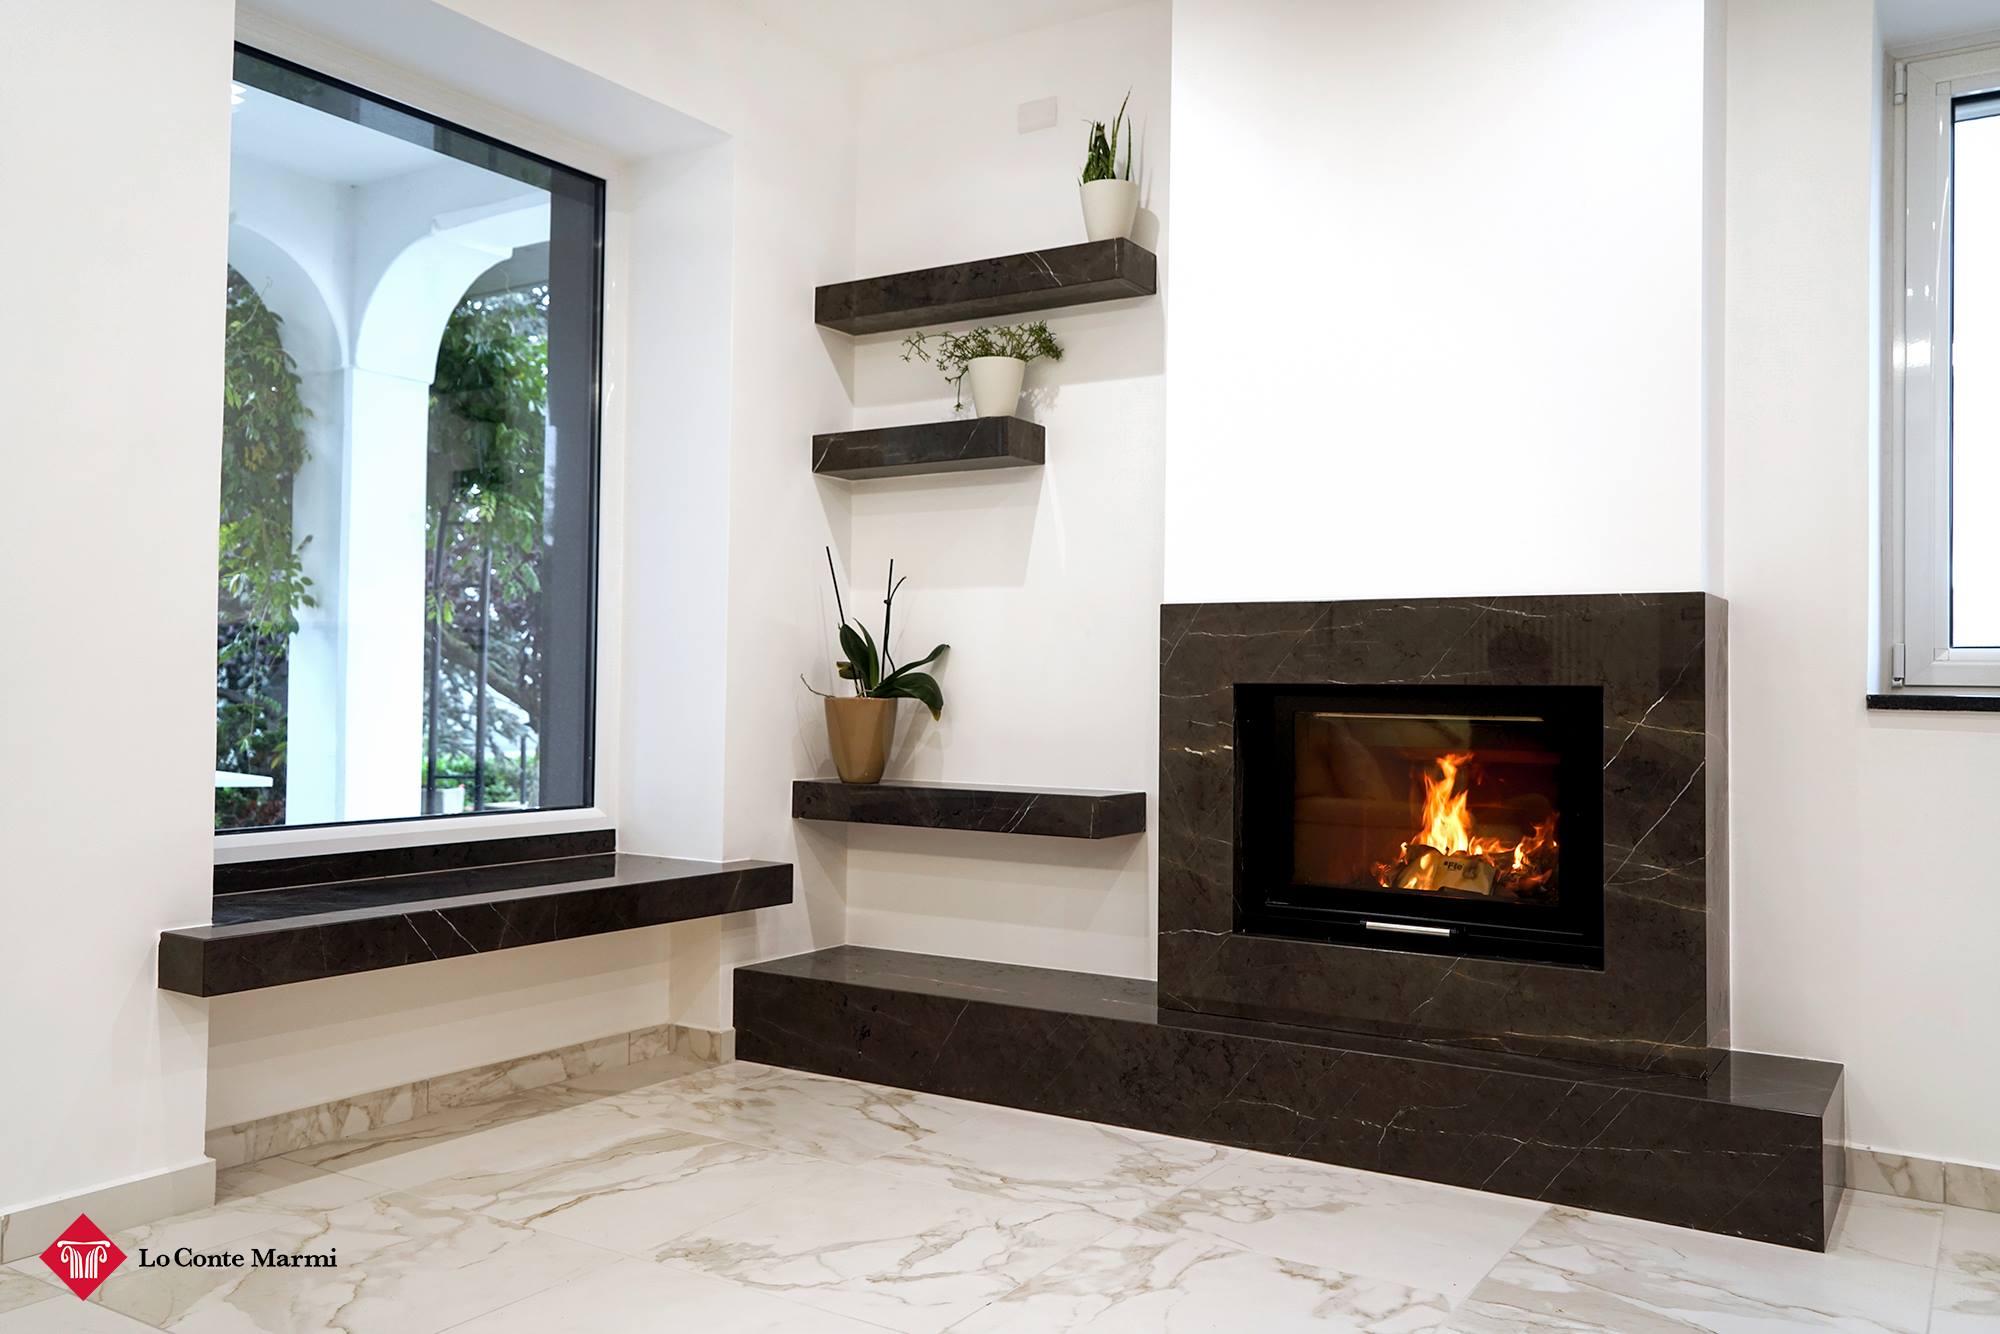 Stone fireplace cladding